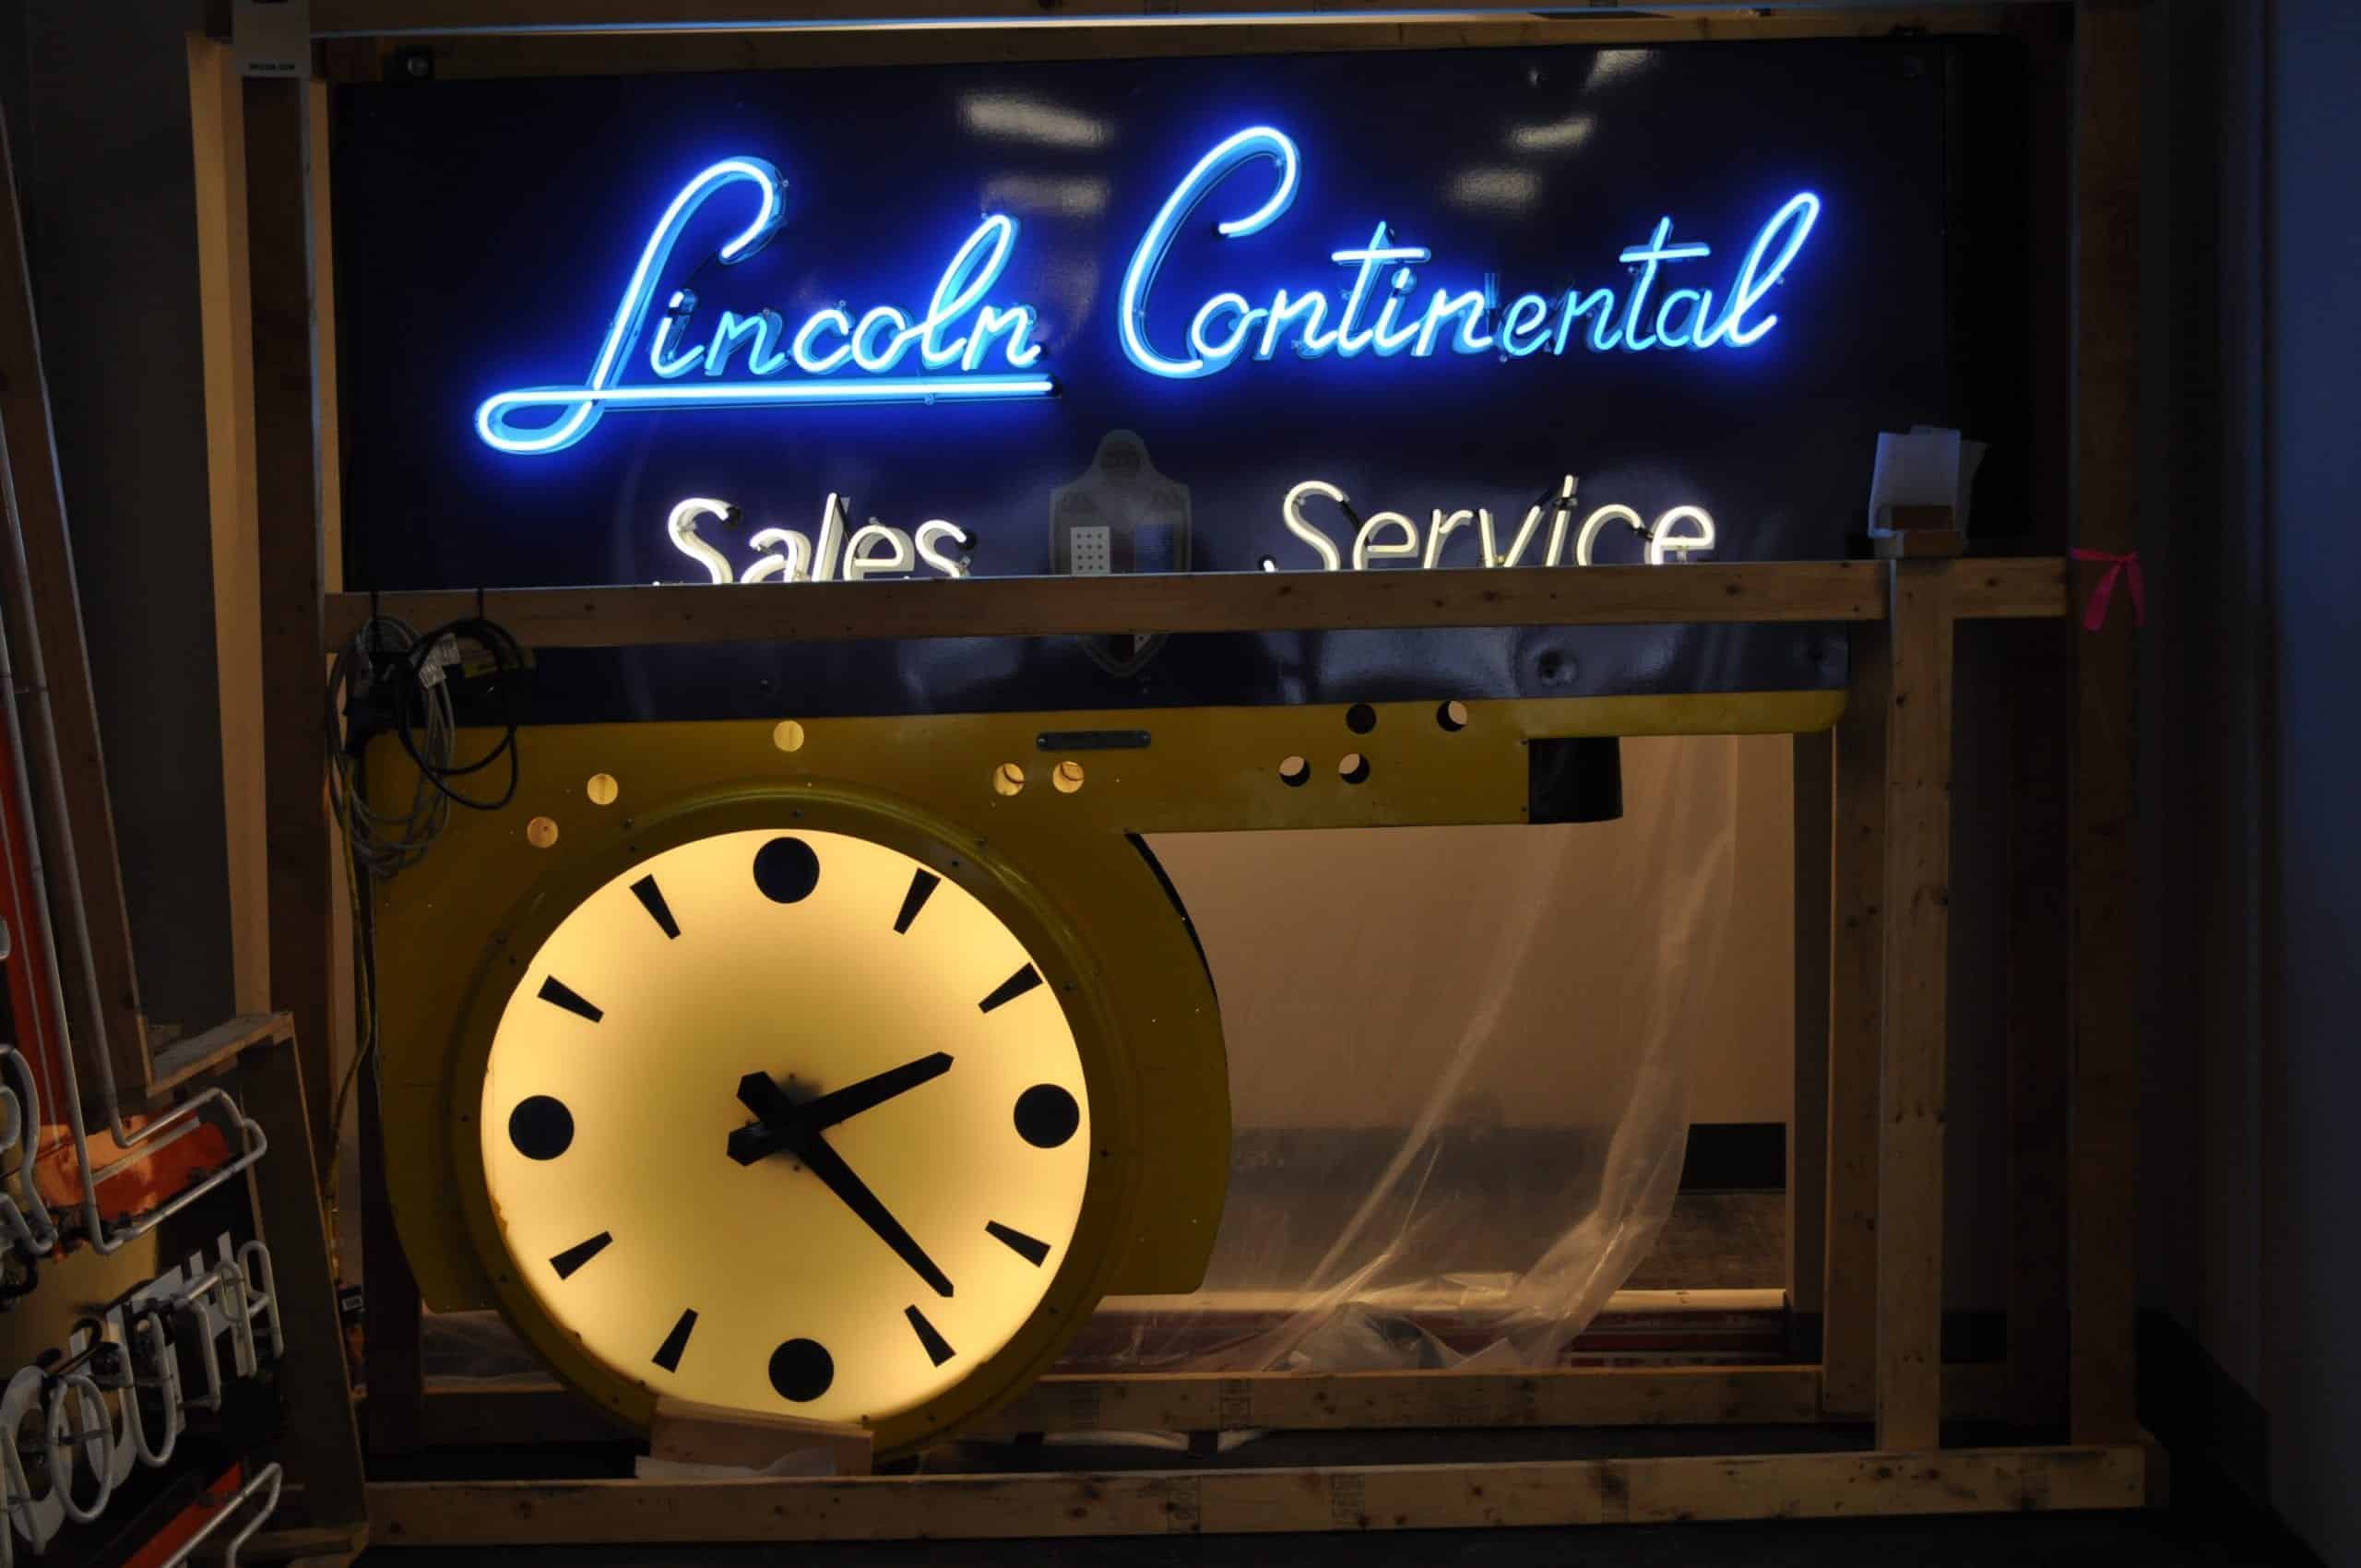 Lincoln Continental Dealership Neon Clock